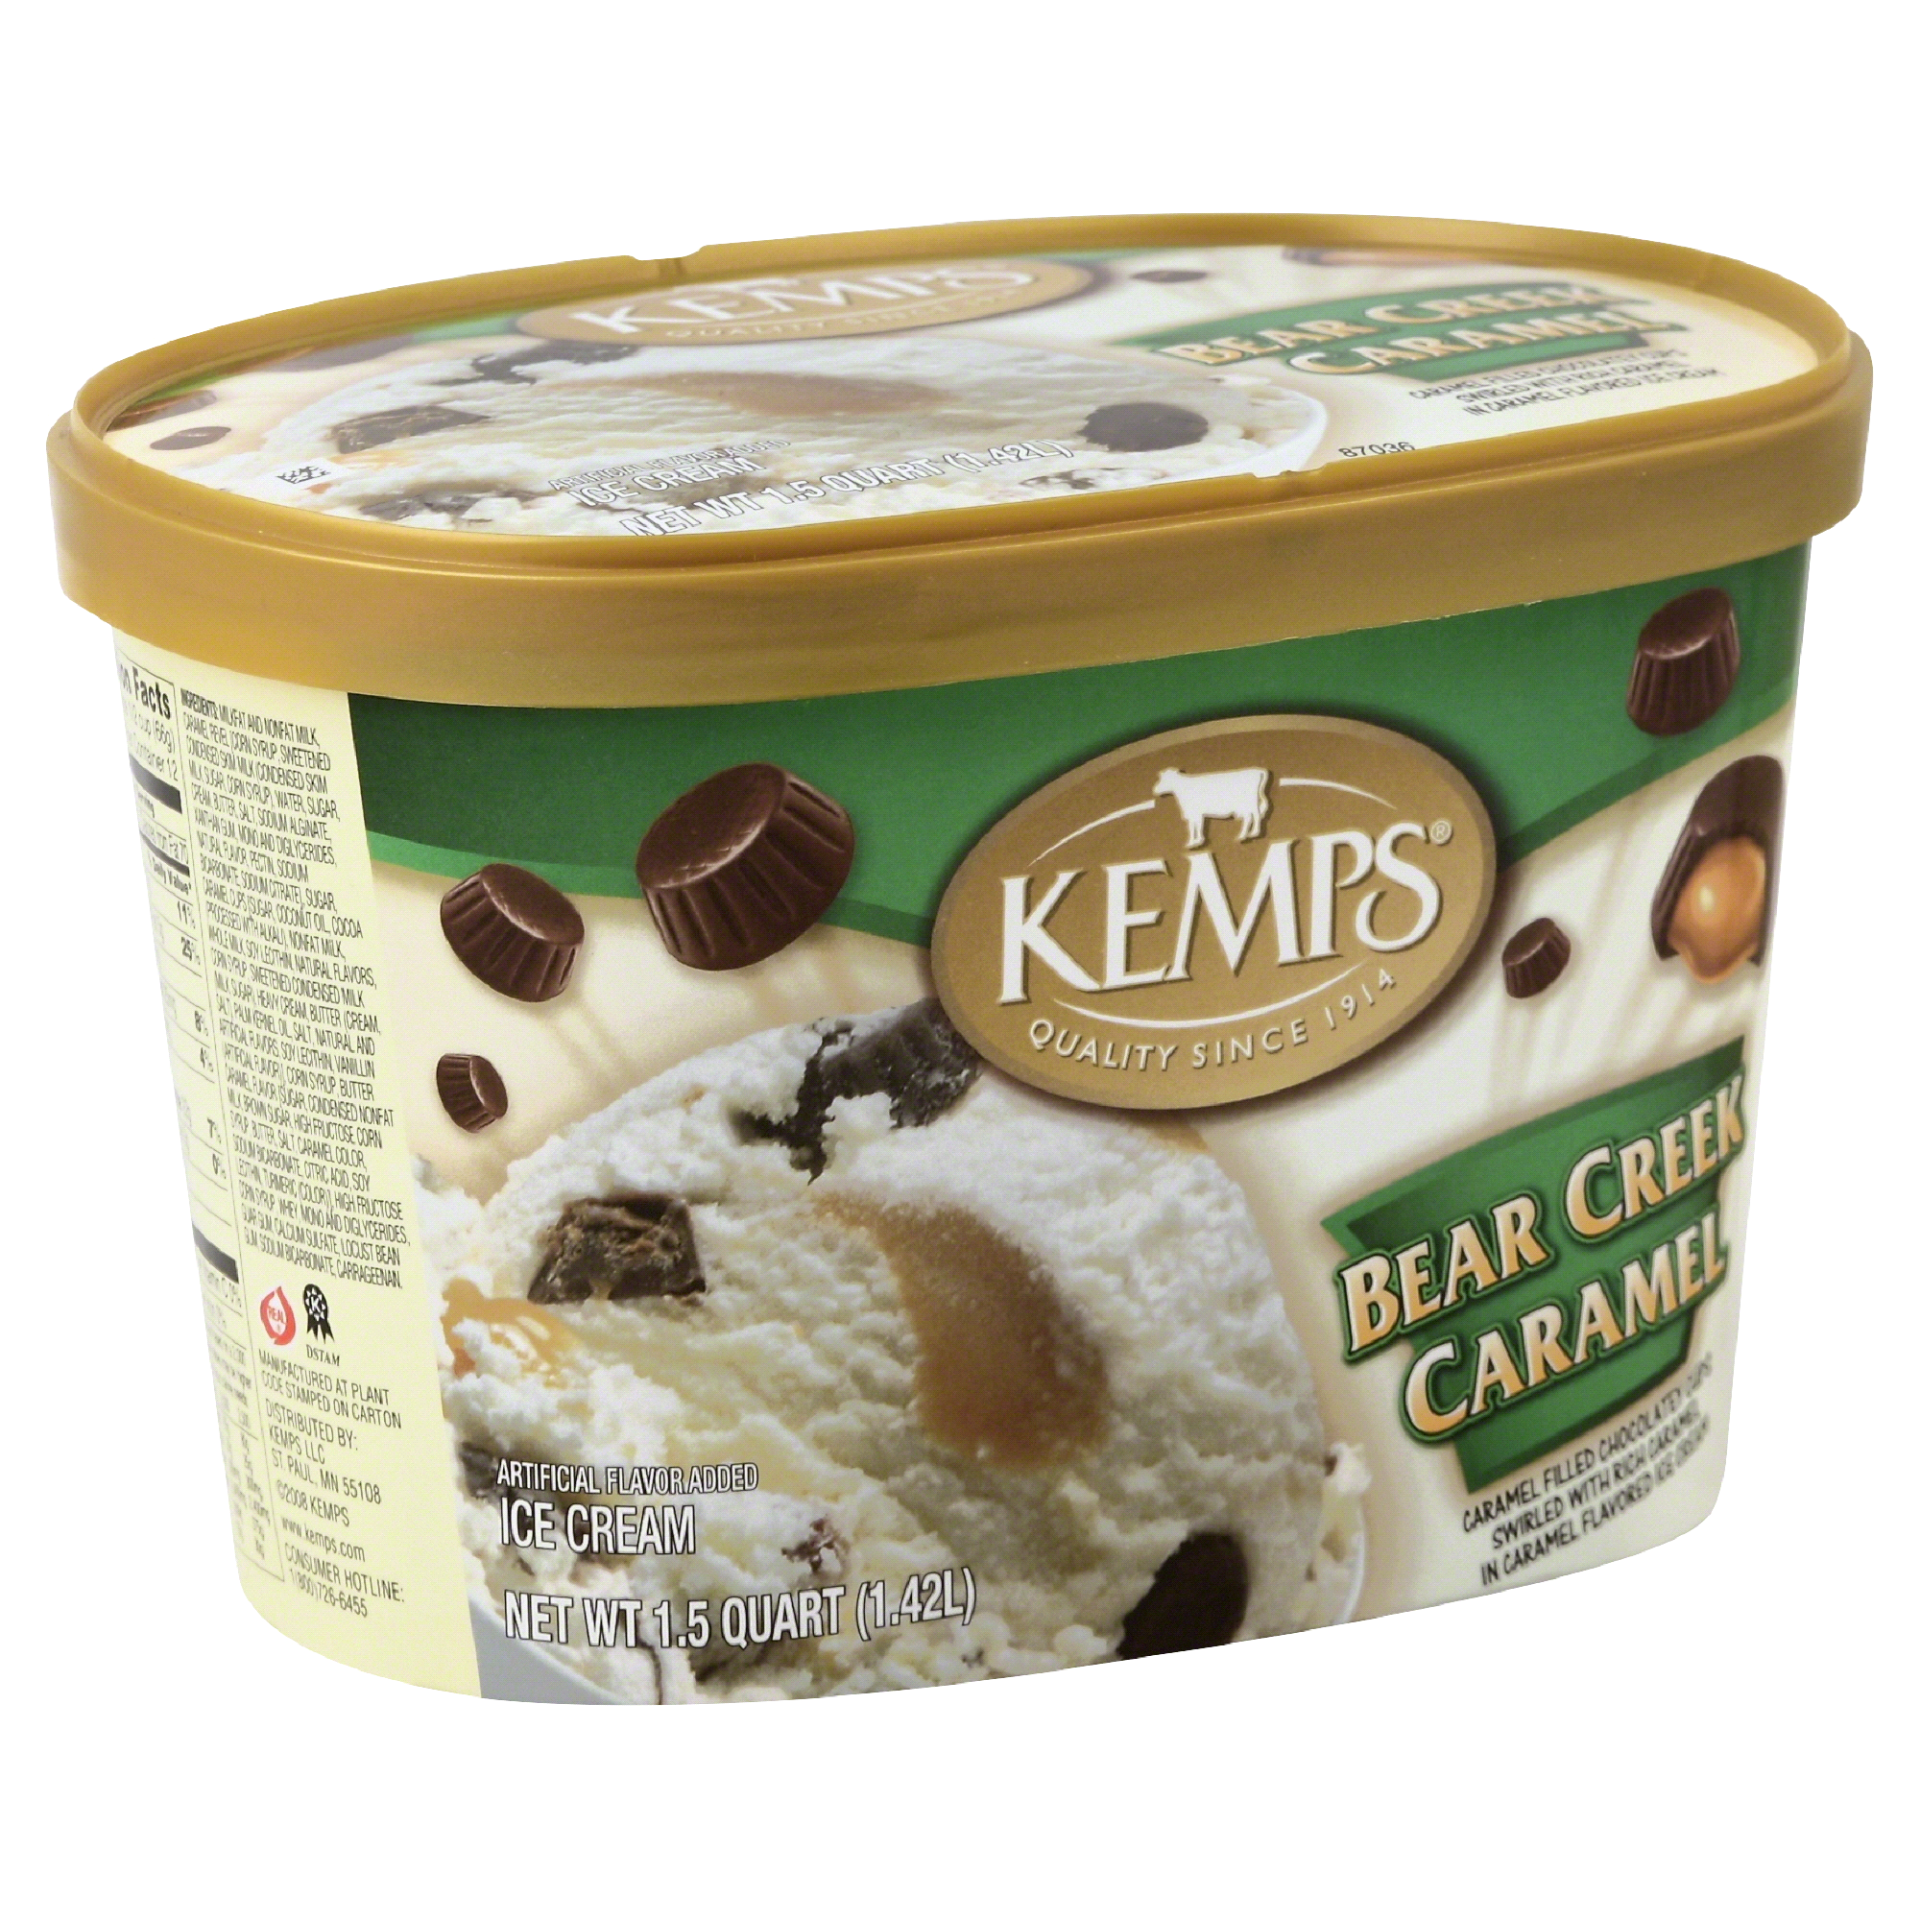 slide 1 of 8, Kemps Ice Cream, Bear Creek Caramel, 1.5 qt